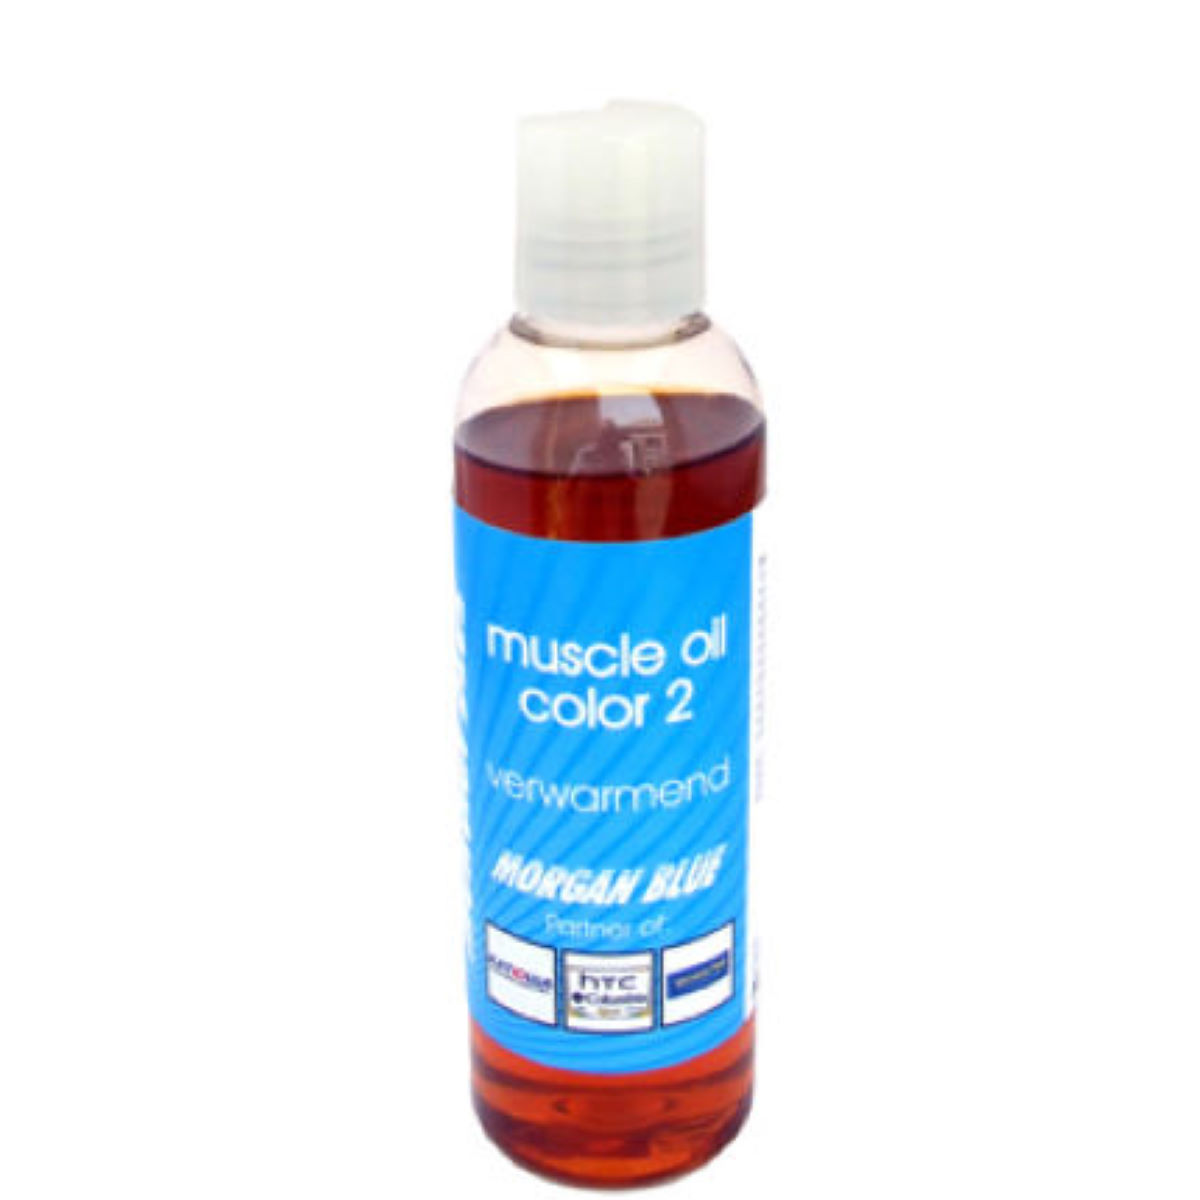 Aceite muscular Morgan Blue Muscle Oil Color 2 (200 ml) - Lociones musculares